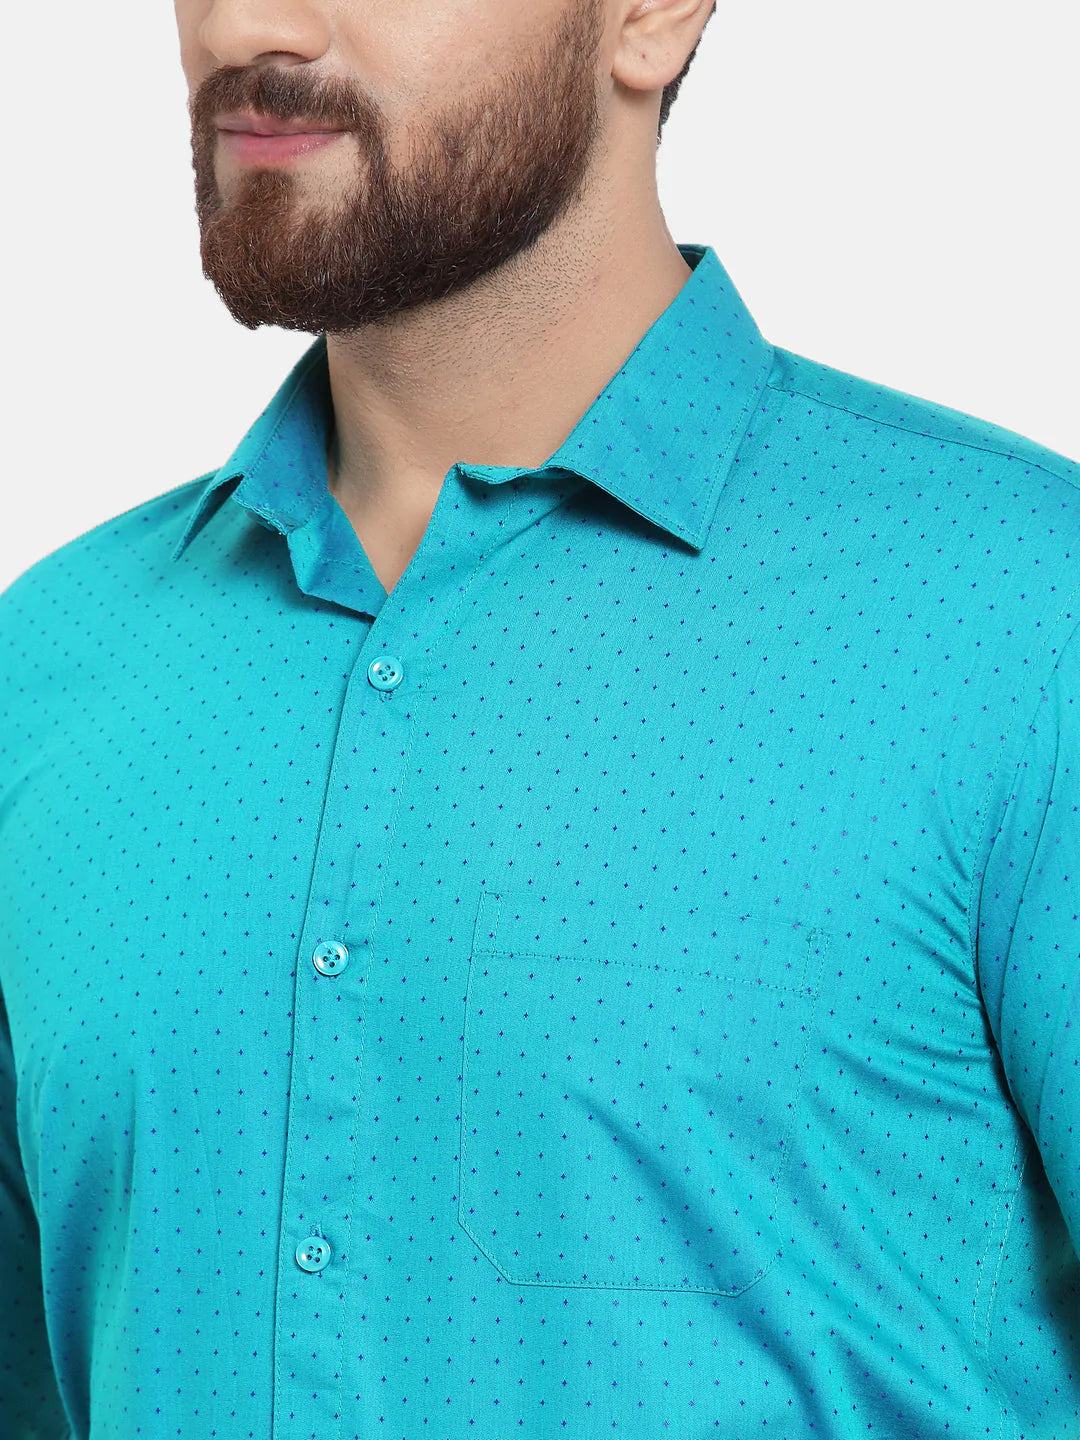 Jainish Green Men's Cotton Polka Dots Formal Shirts ( SF 739Green )